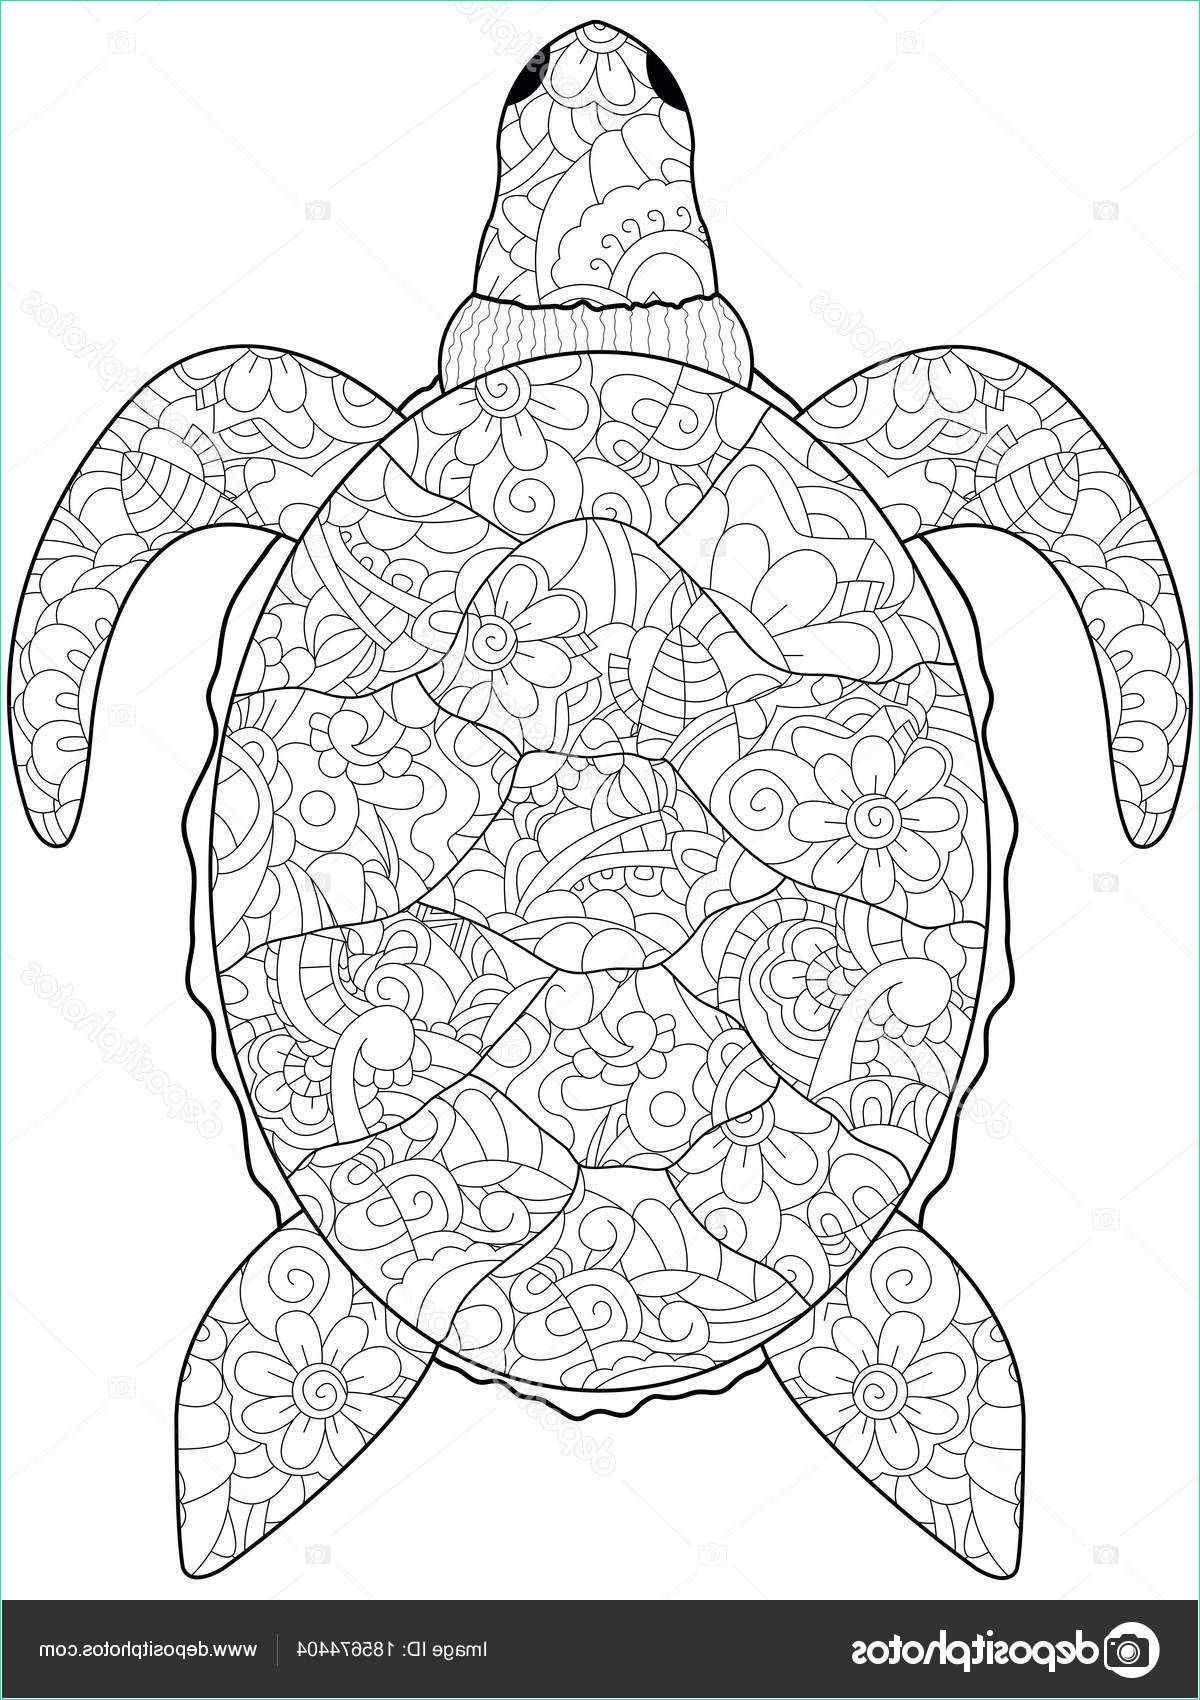 12 precieux coloriage anti stress animaux tortue pics